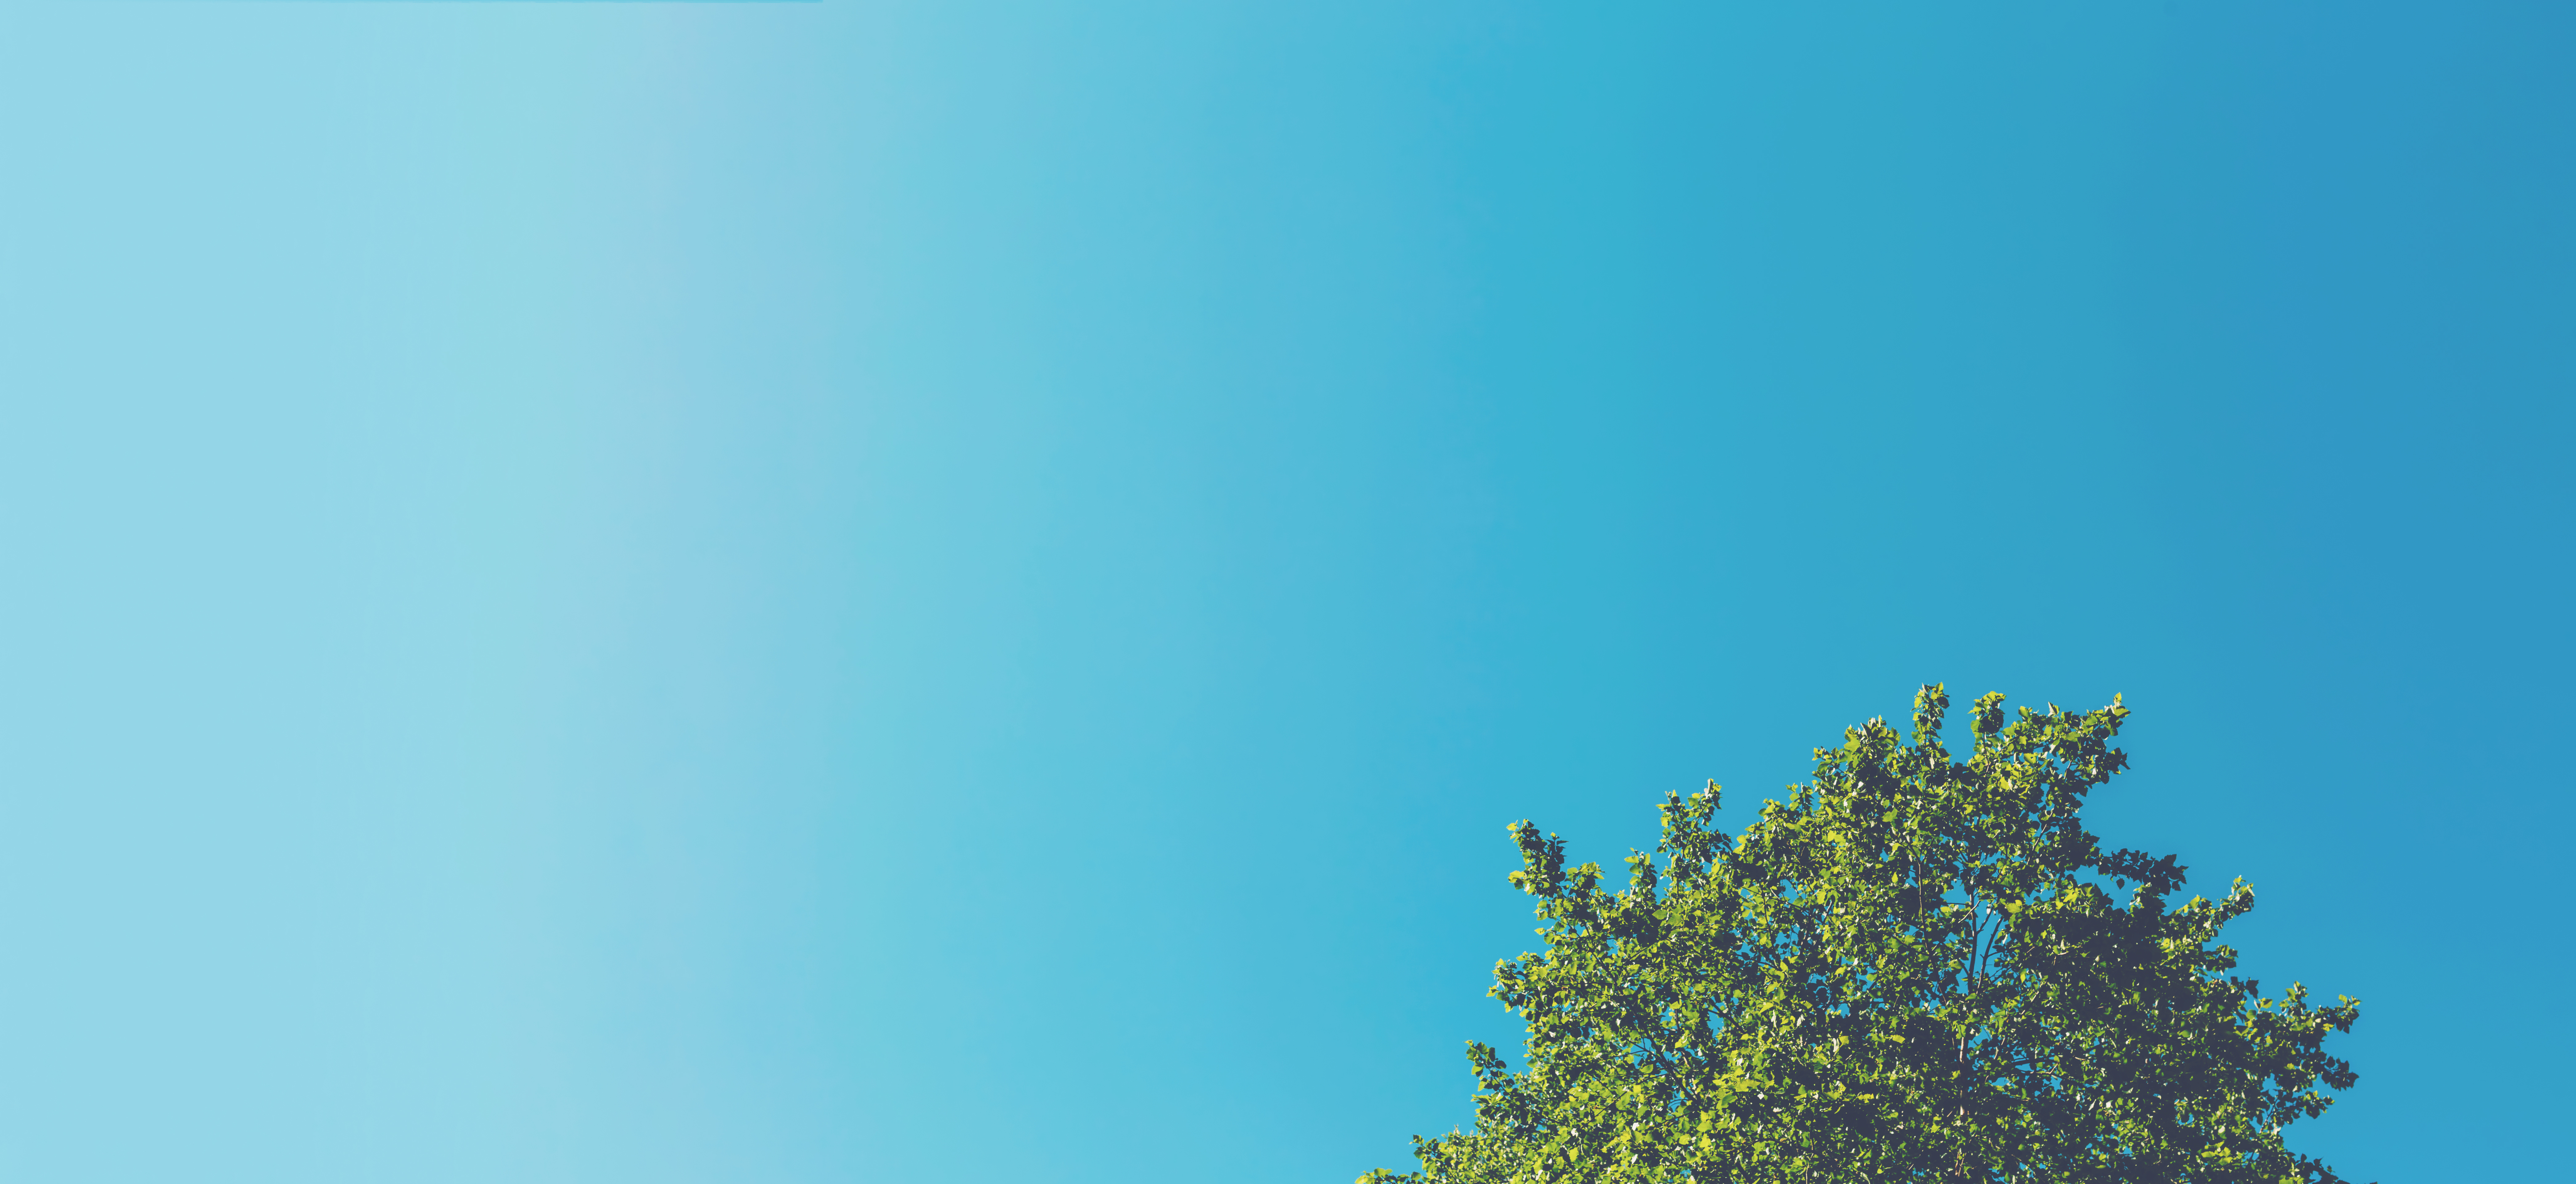 Minimalist tree top with light blue sky background